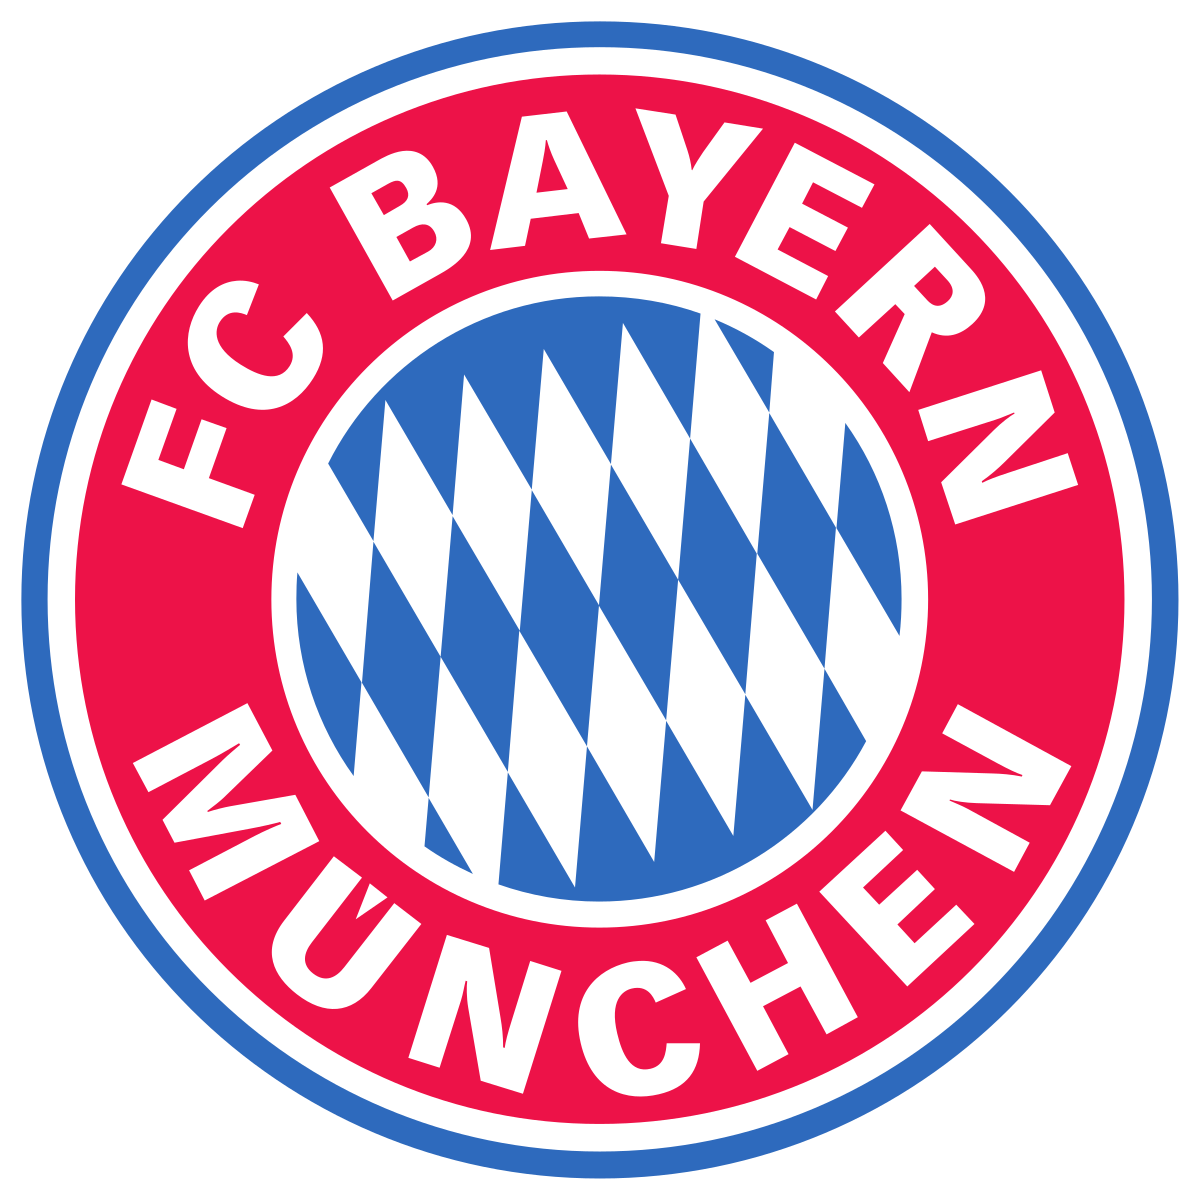 TSV 1860 Múnich - Wikipedia, la enciclopedia libre